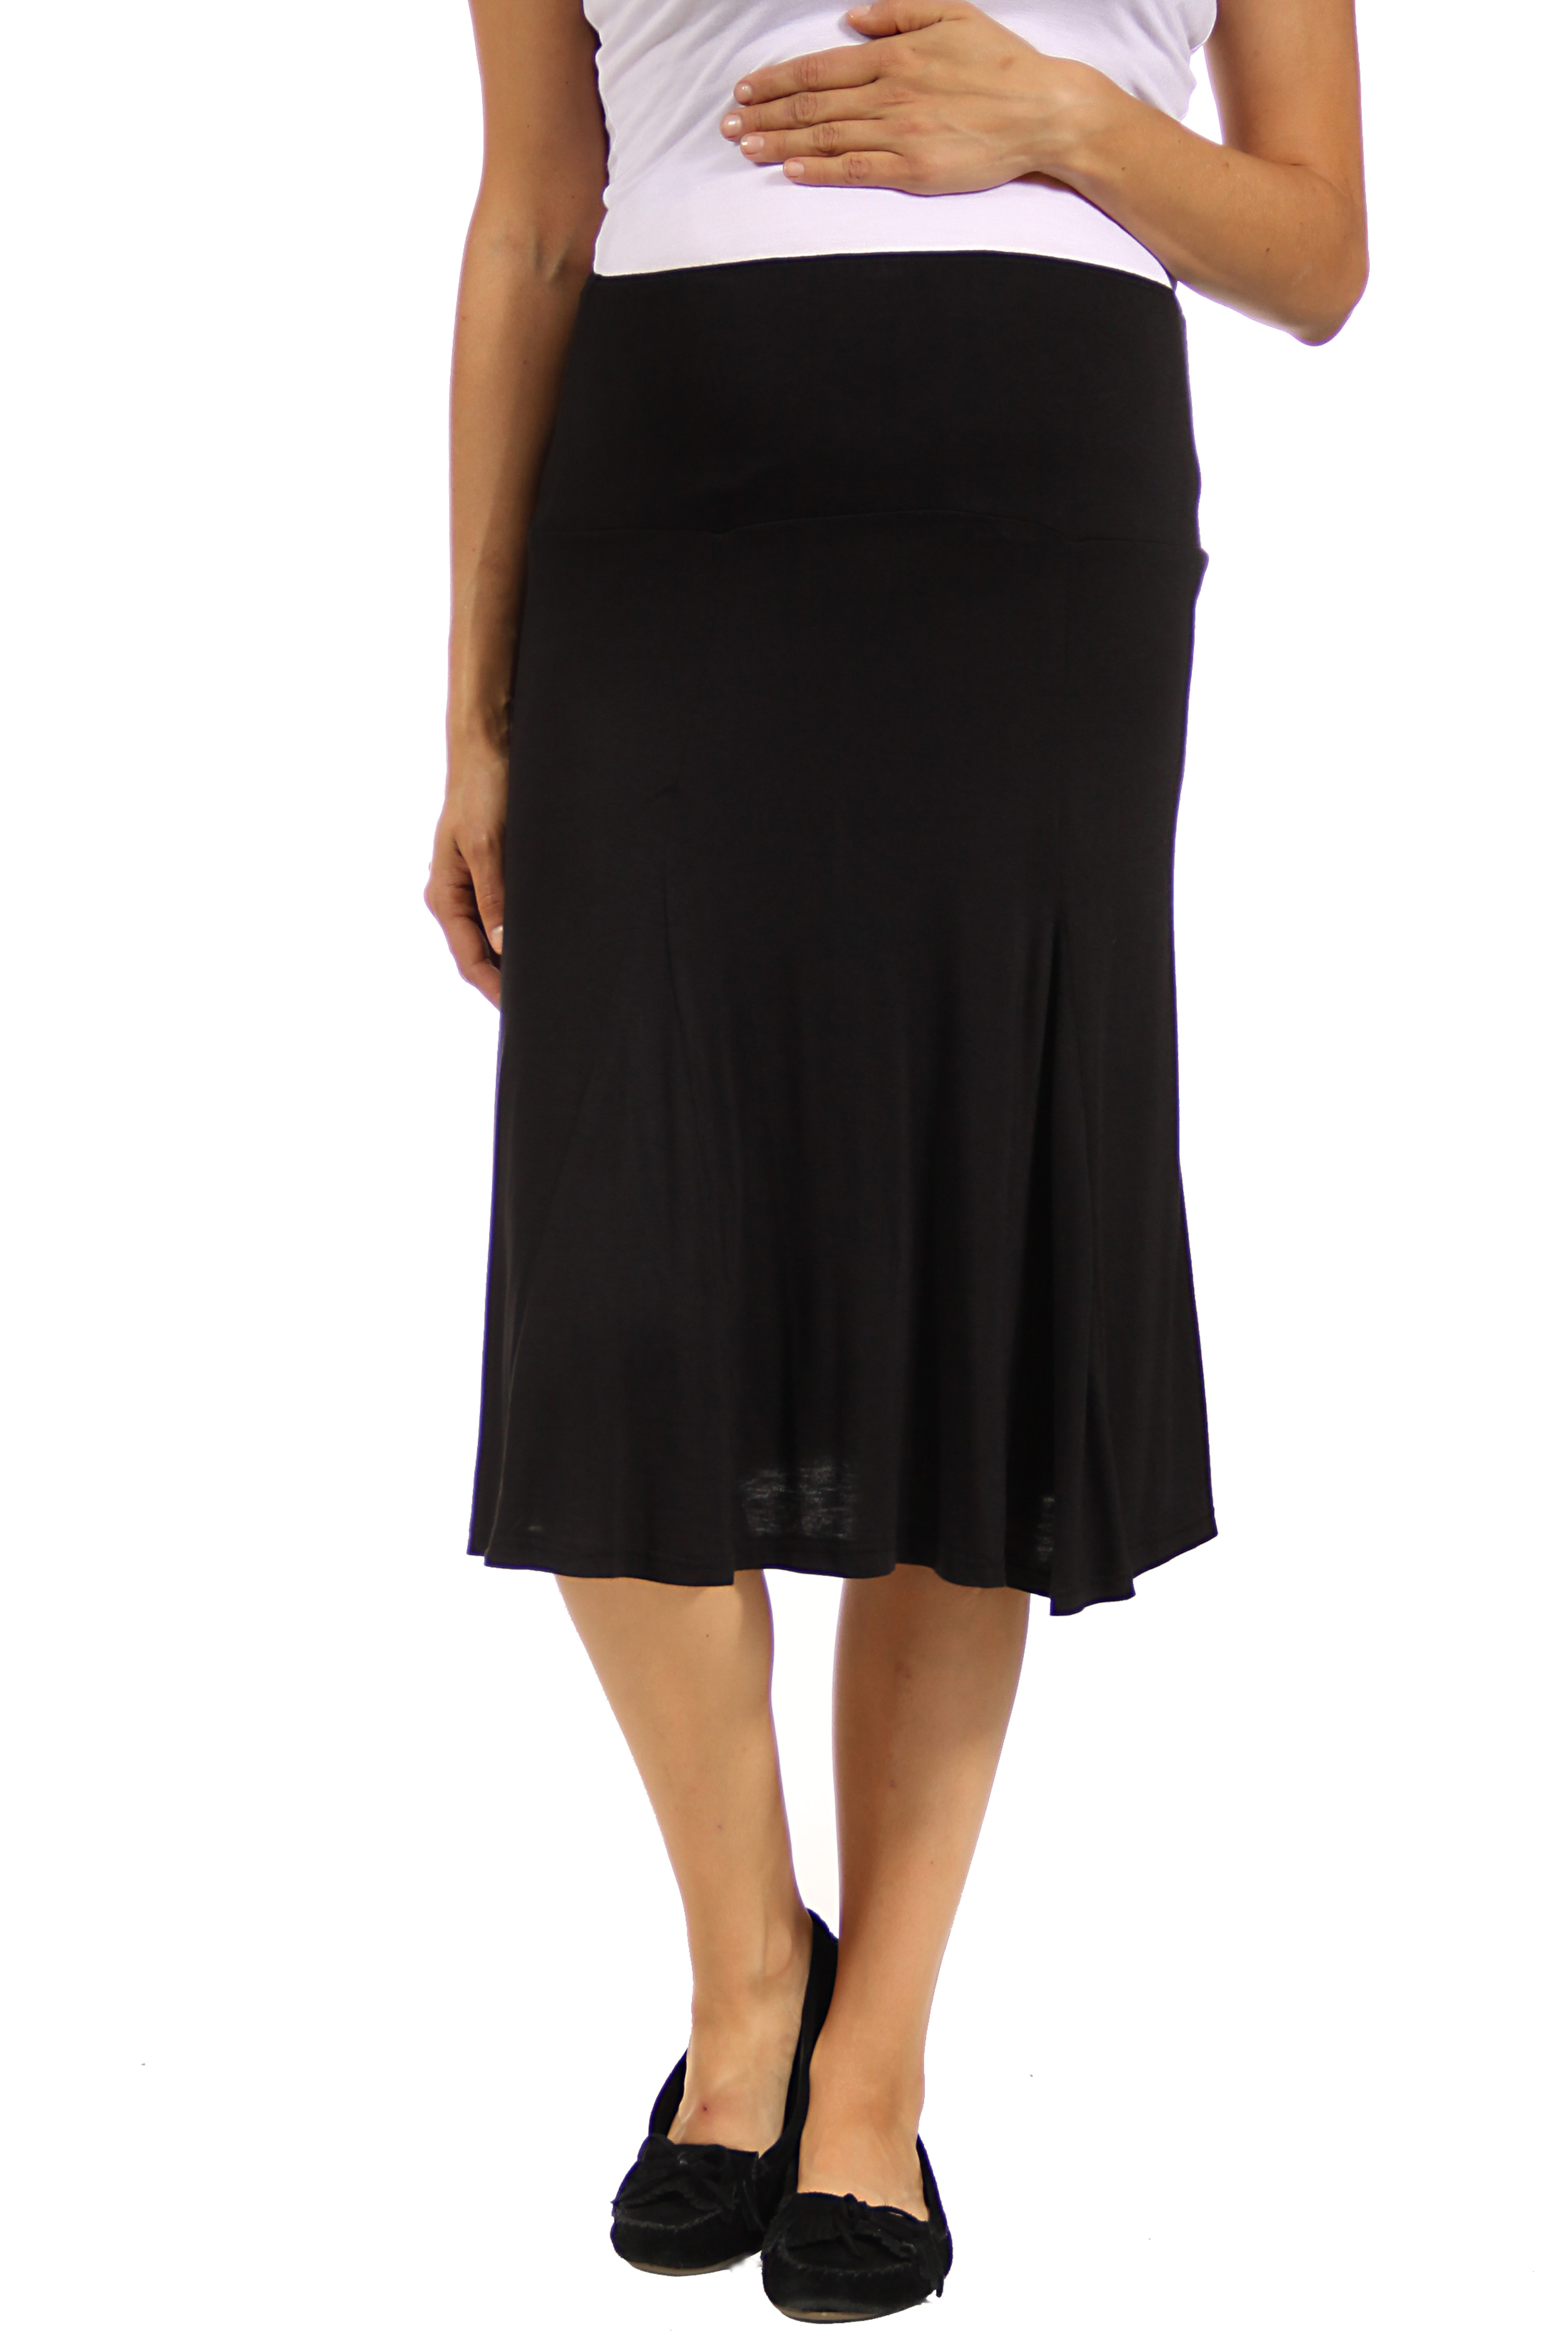 24/7 Comfort Apparel Women's Maternity Calf-Length Skirt